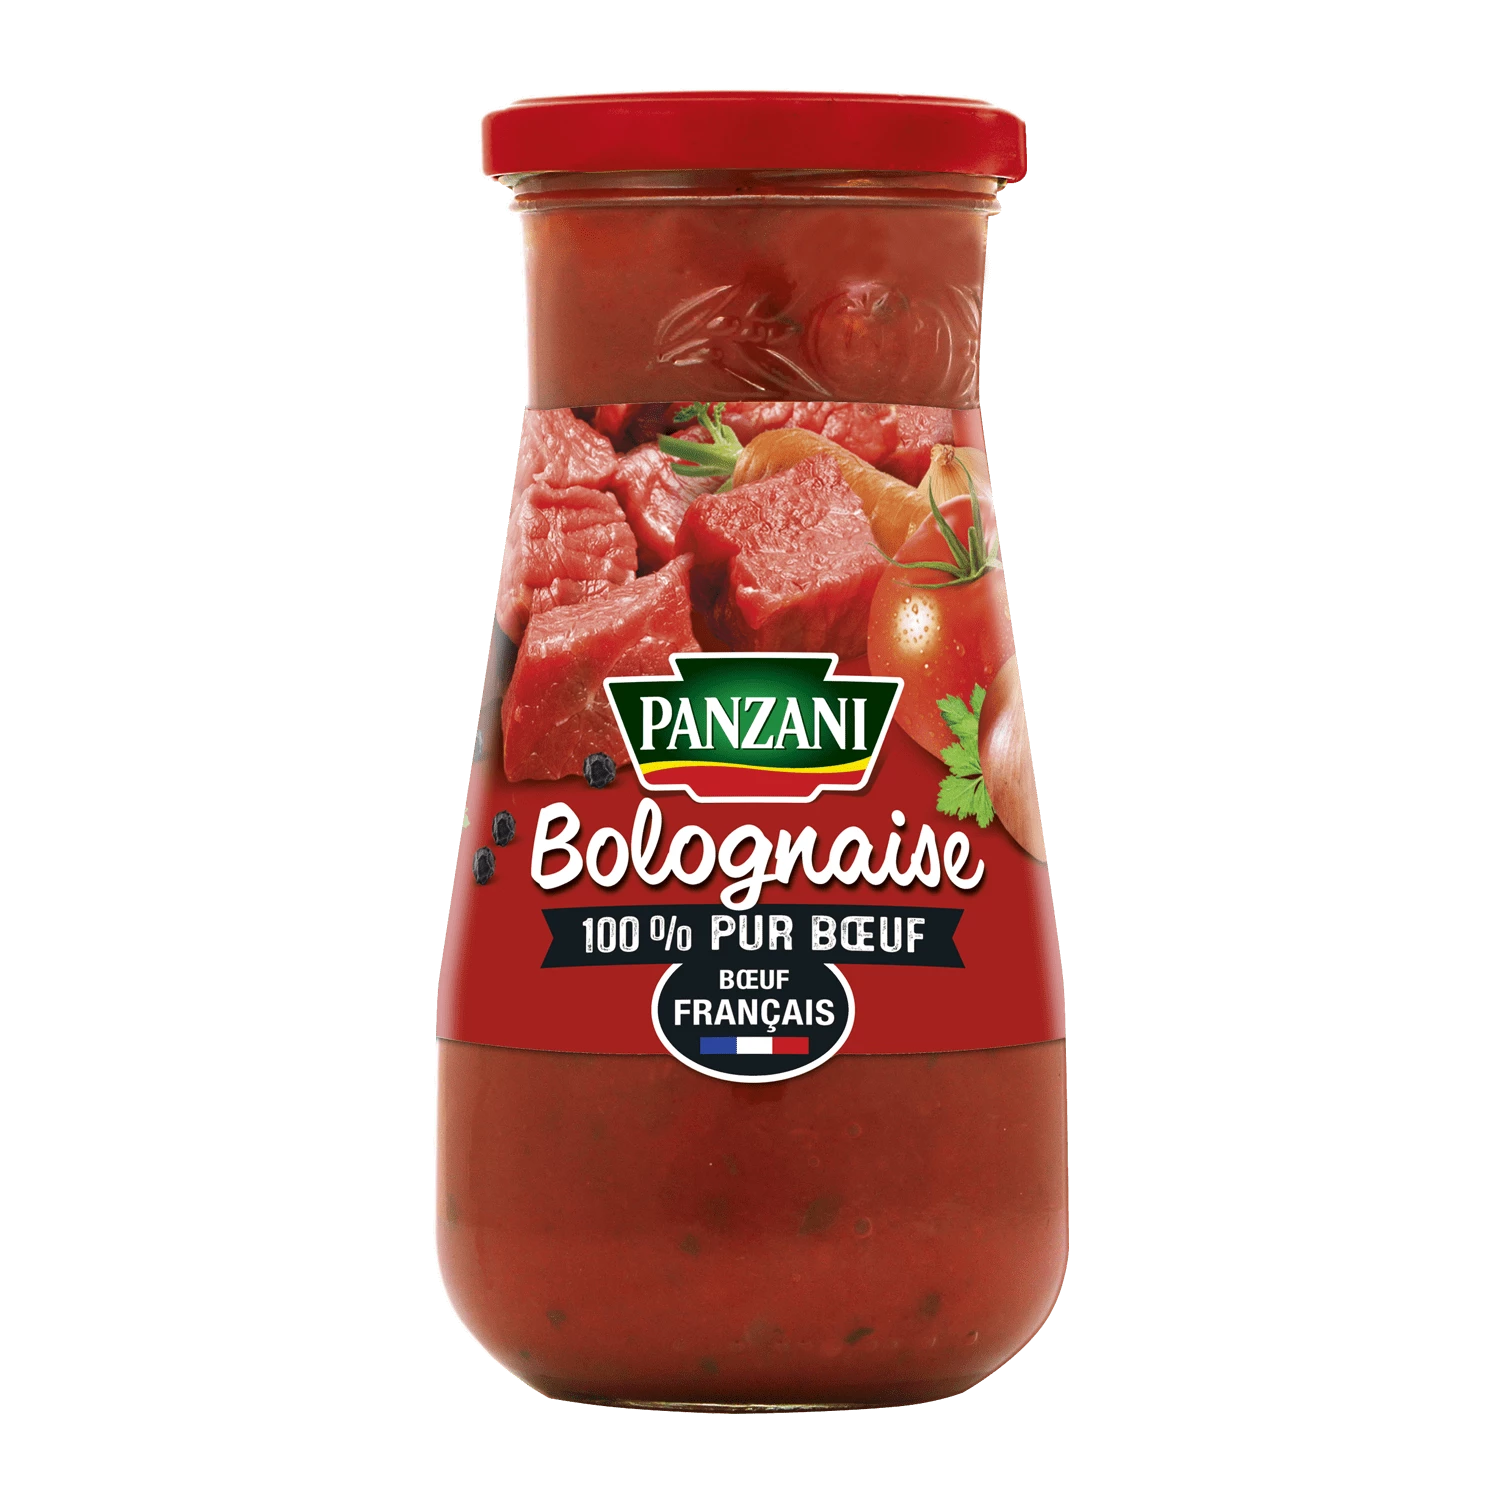 Pure Beef Bolognese Sauce, 400g - PANZANI